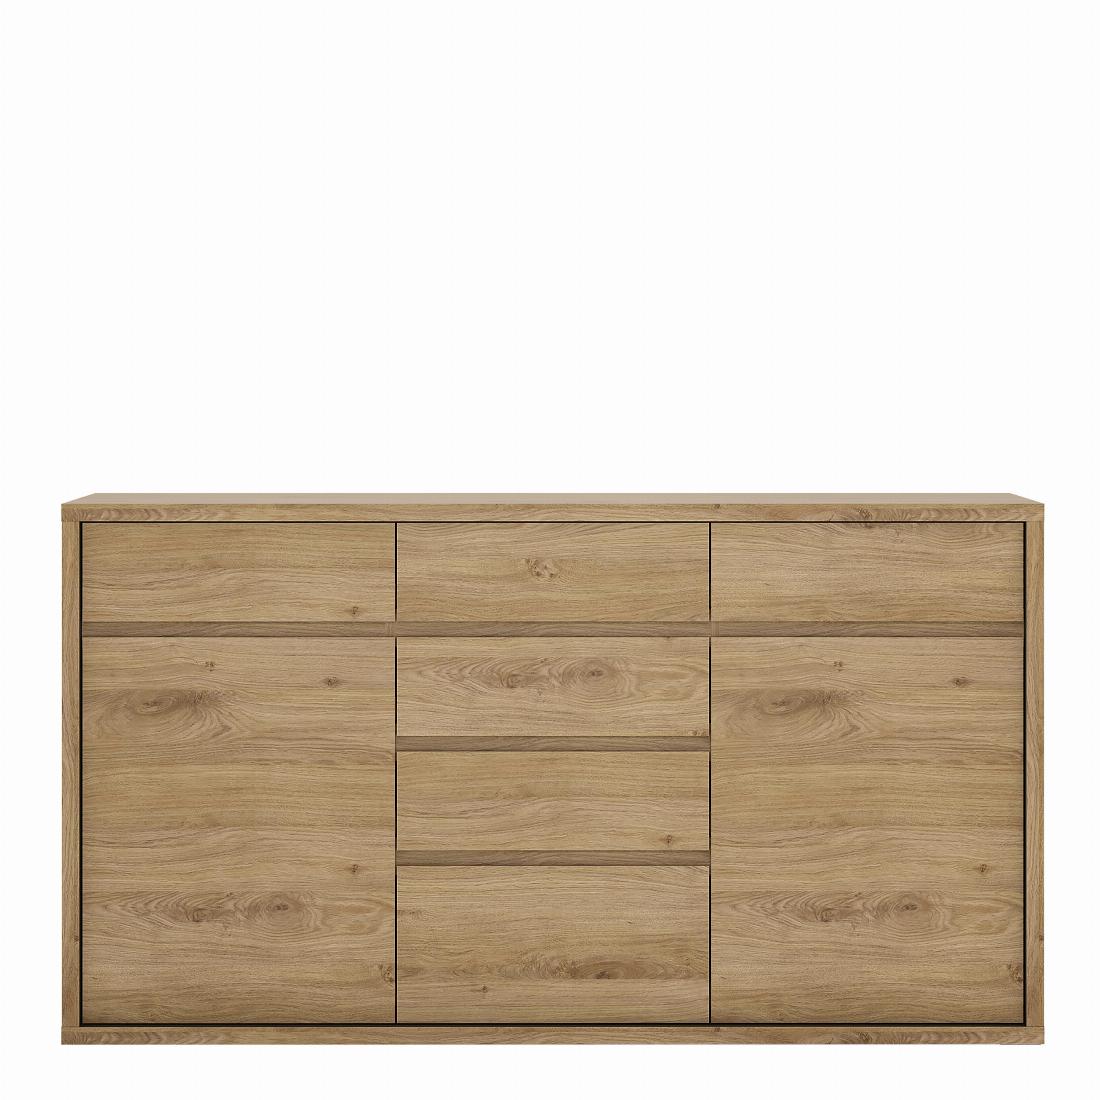 Shetland 2 door 6 drawer chest